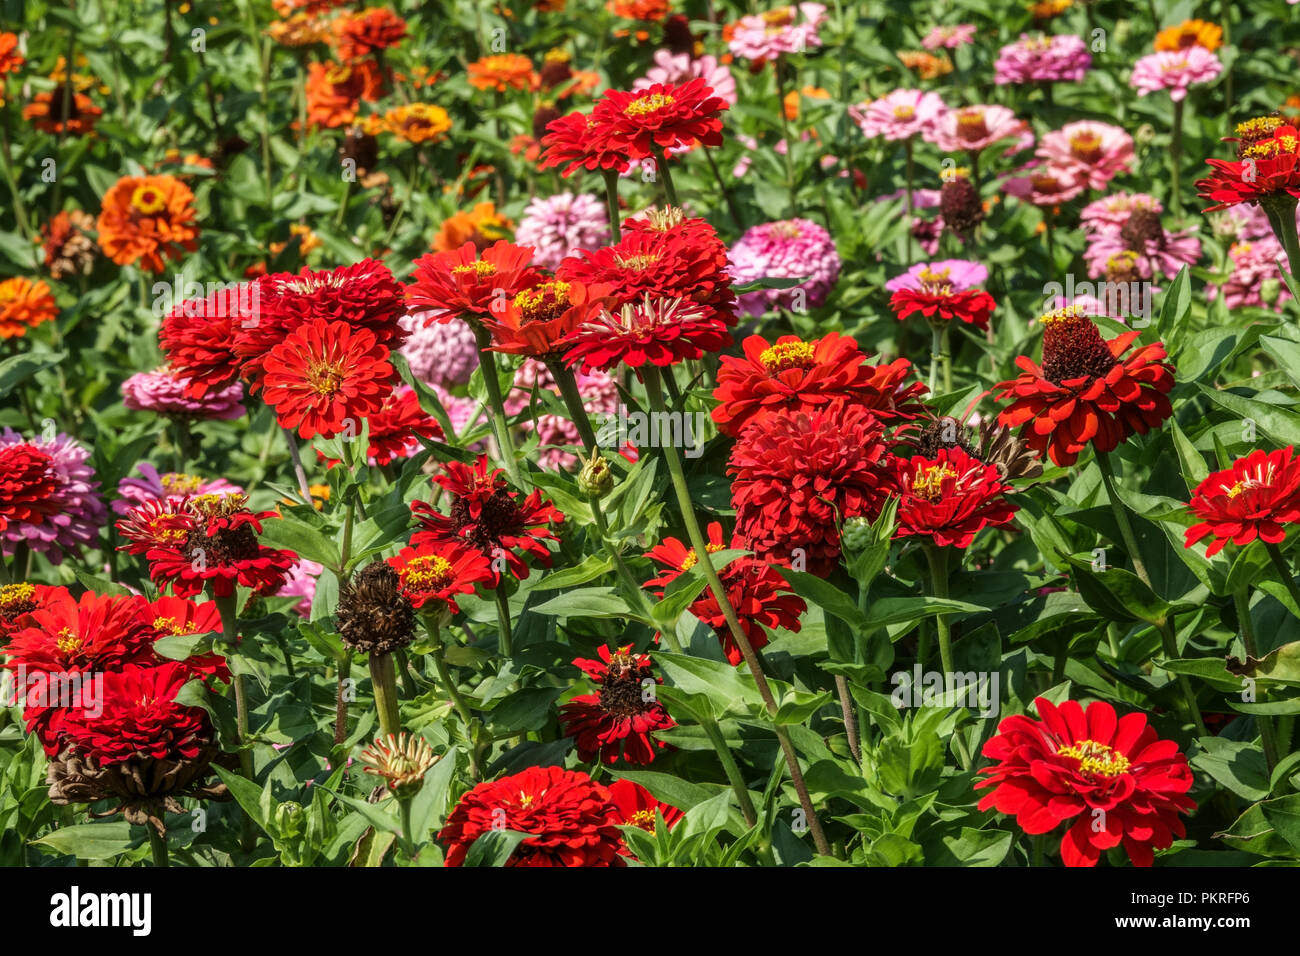 Red Zinnias, Zinnia ' Scarlet Flame ', flower bed, summer bedding plants garden Stock Photo